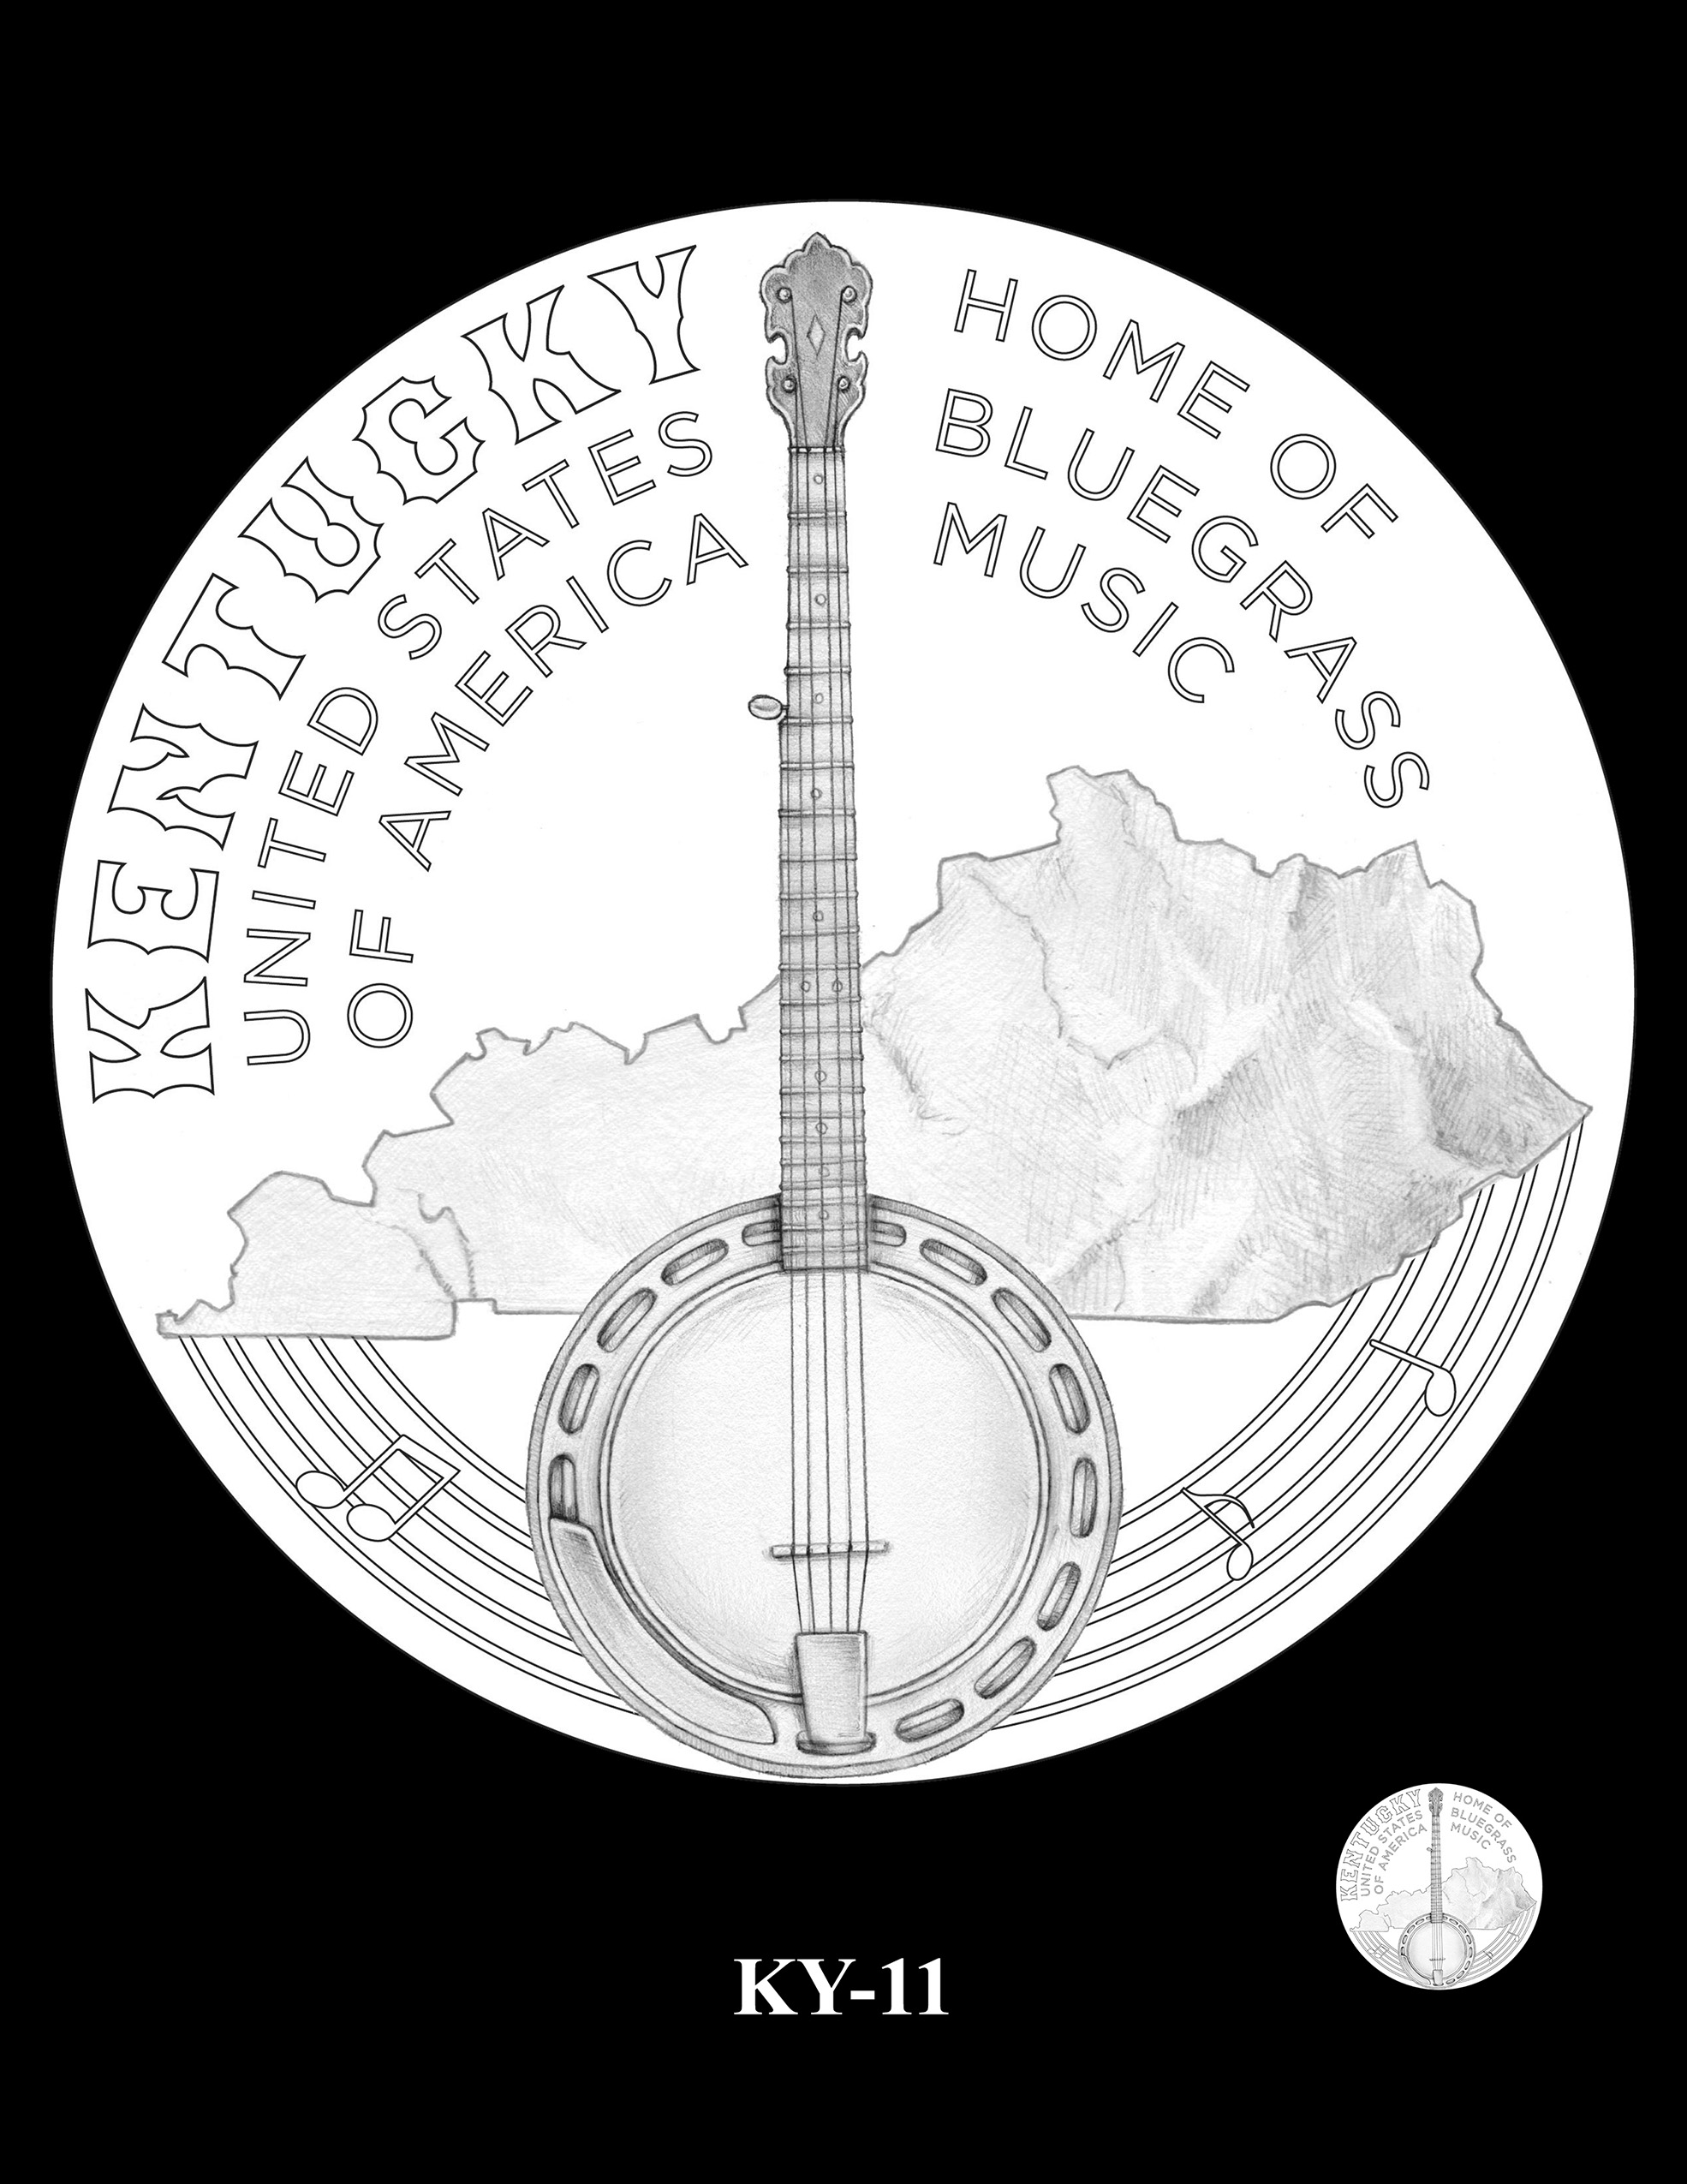 KY-11 -- 2022 American Innovation $1 Coin - Kentucky